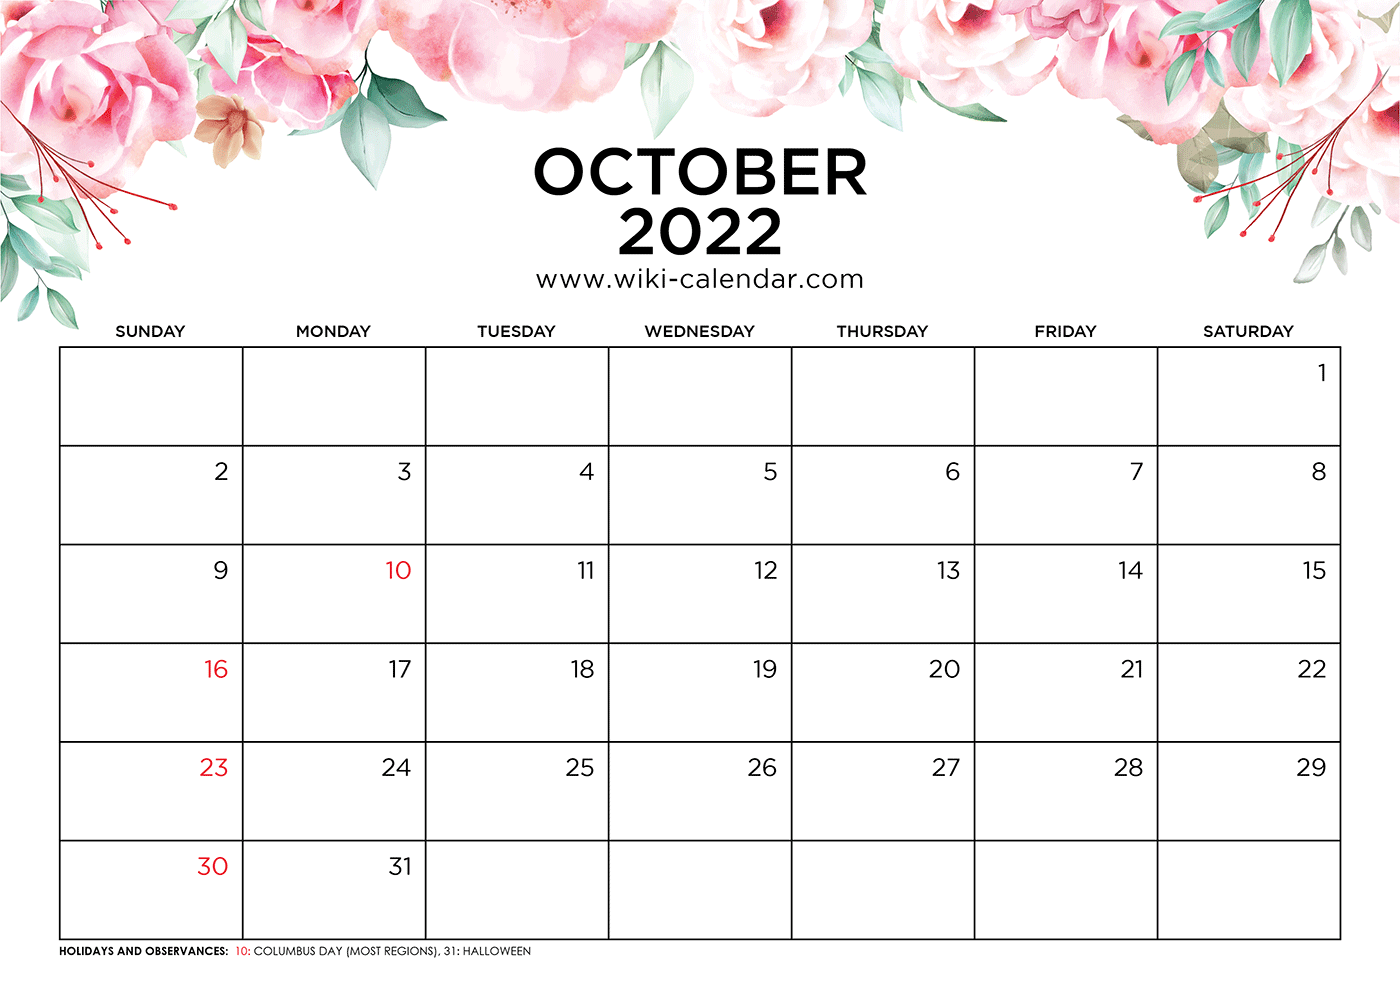 October 2022 Free Printable Calendar Free Printable October 2022 Calendars - Wiki Calendar